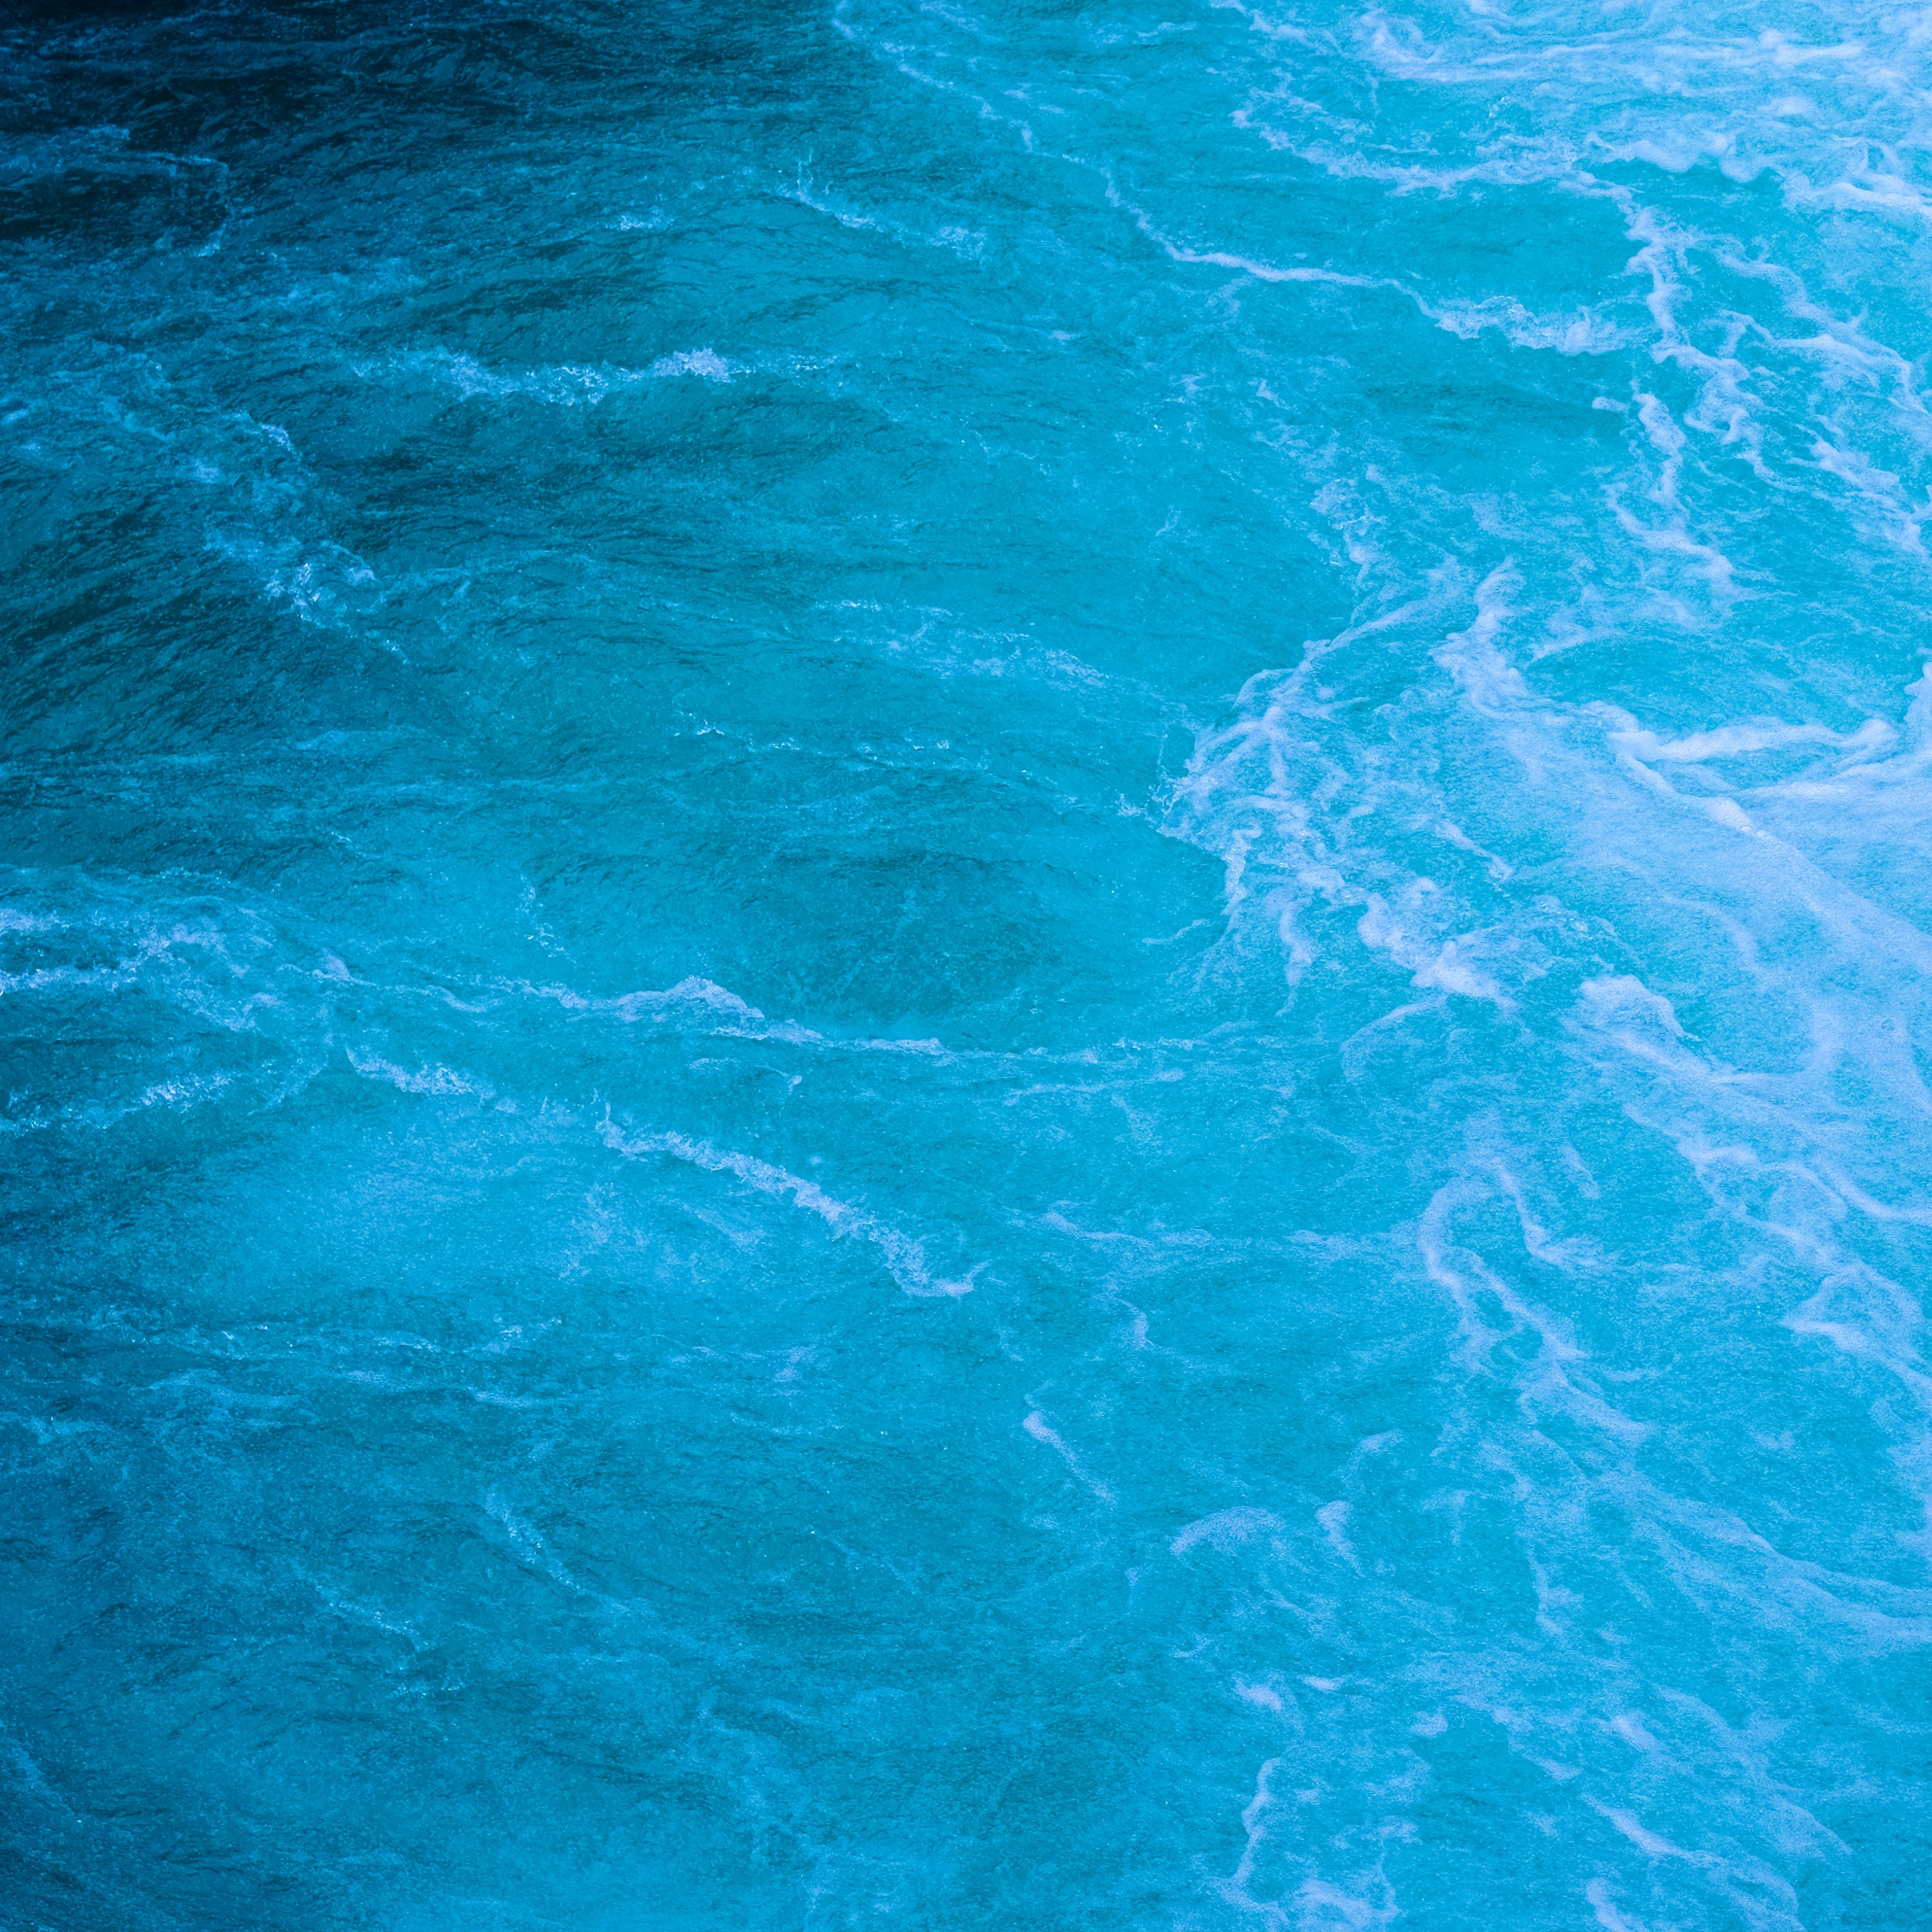 iPad Wallpapers Blue Sea Waves Aqua Water Texture iPad Wallpaper 3208x3208 px